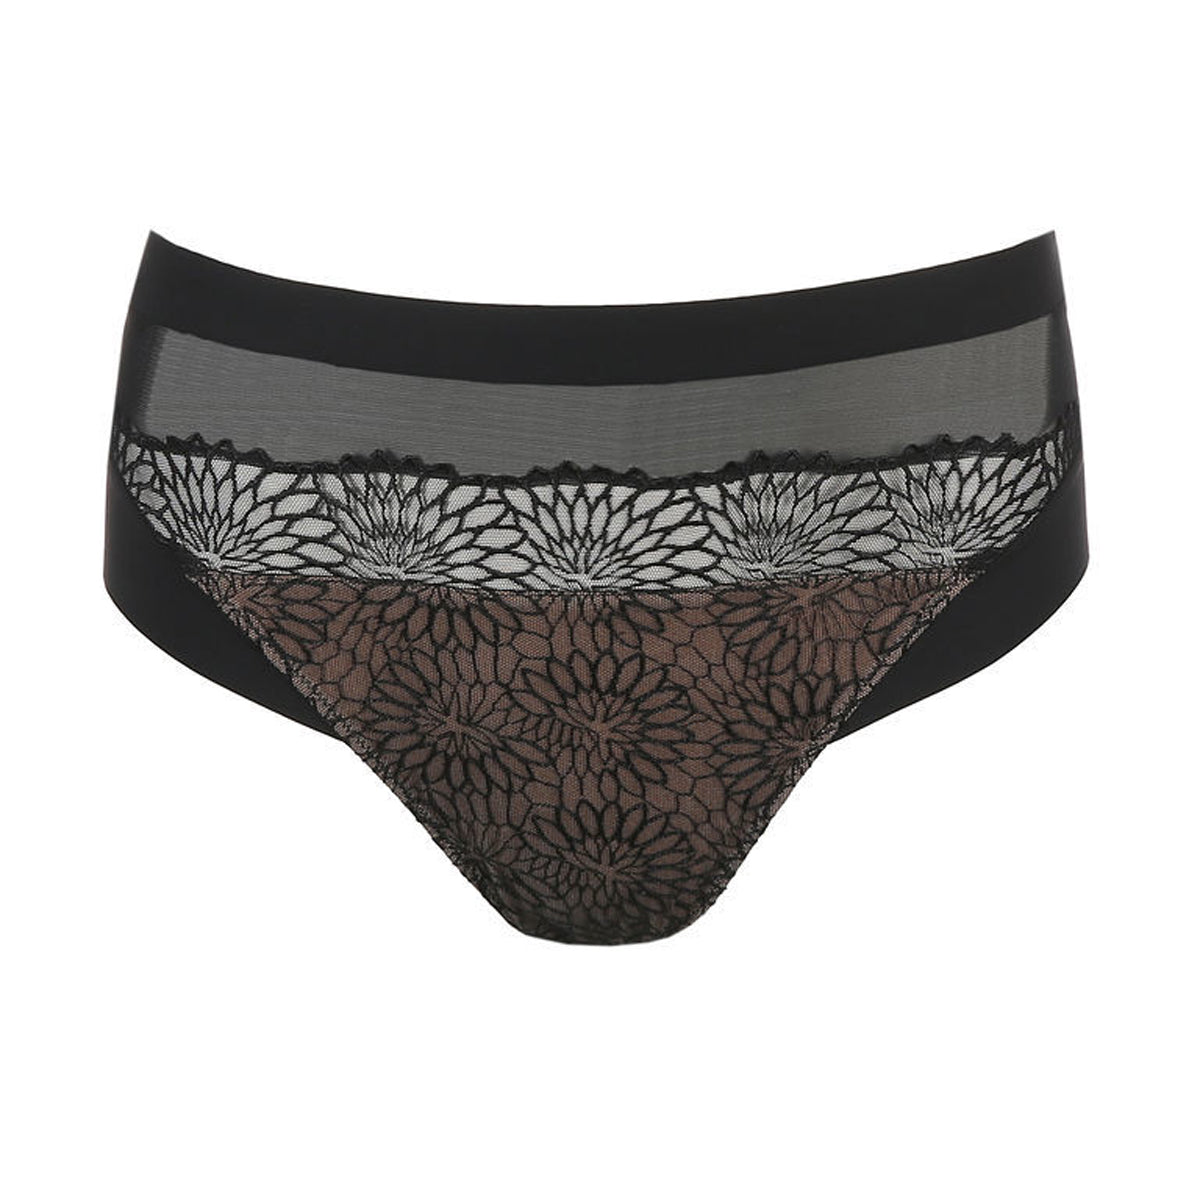 PrimaDonna Sophora Brief panty in Black 056-3181 prima donna lingerie canada toronto linea intima